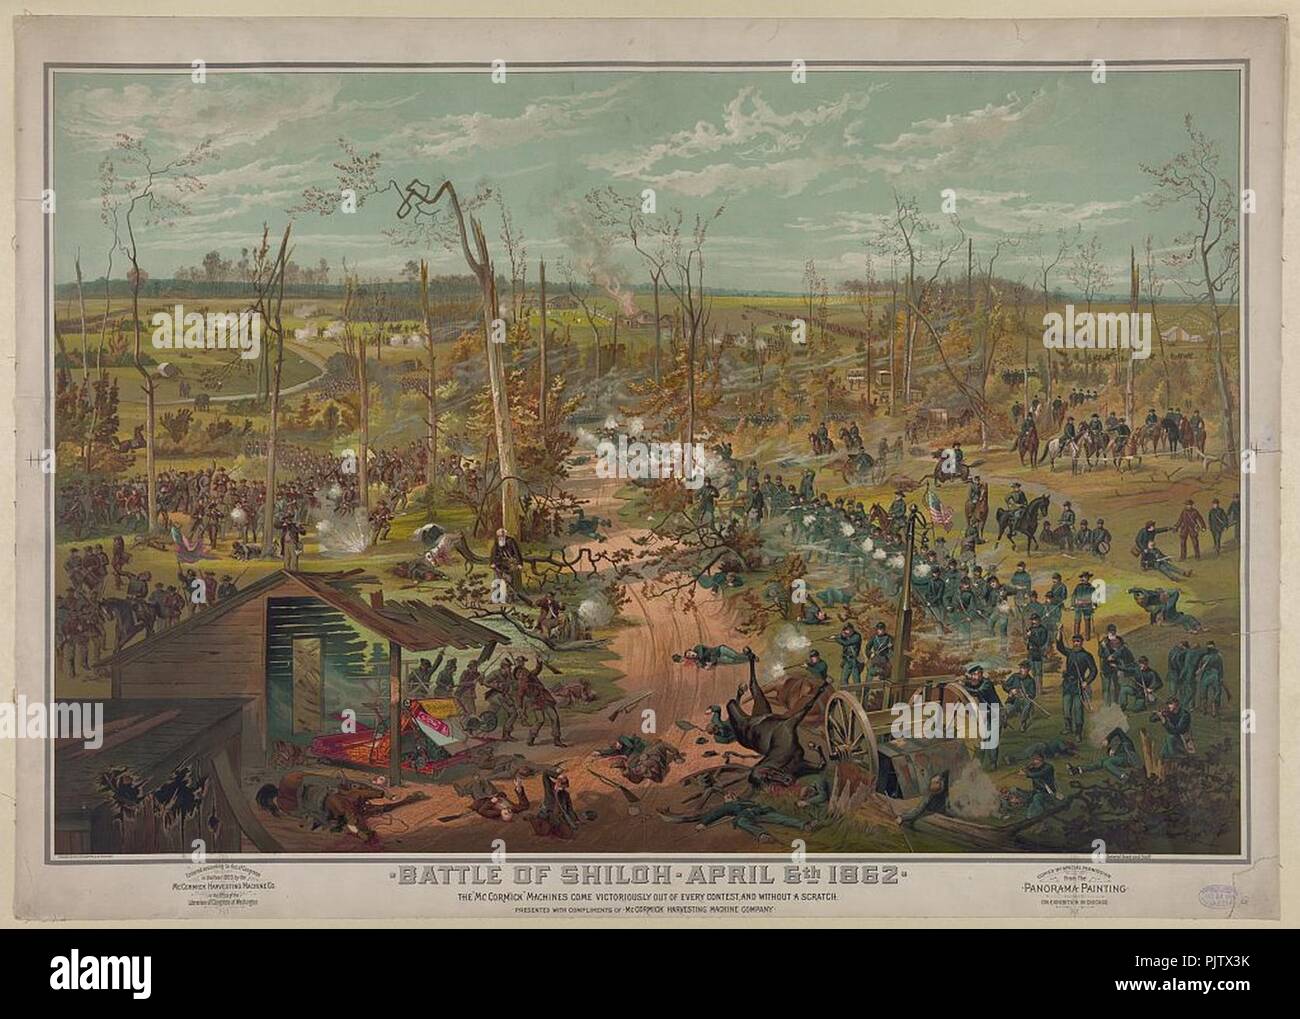 Battle of Shiloh - April 6th 1862 - Cosack & Co. Lith. Buffalo & Chicago. Stock Photo